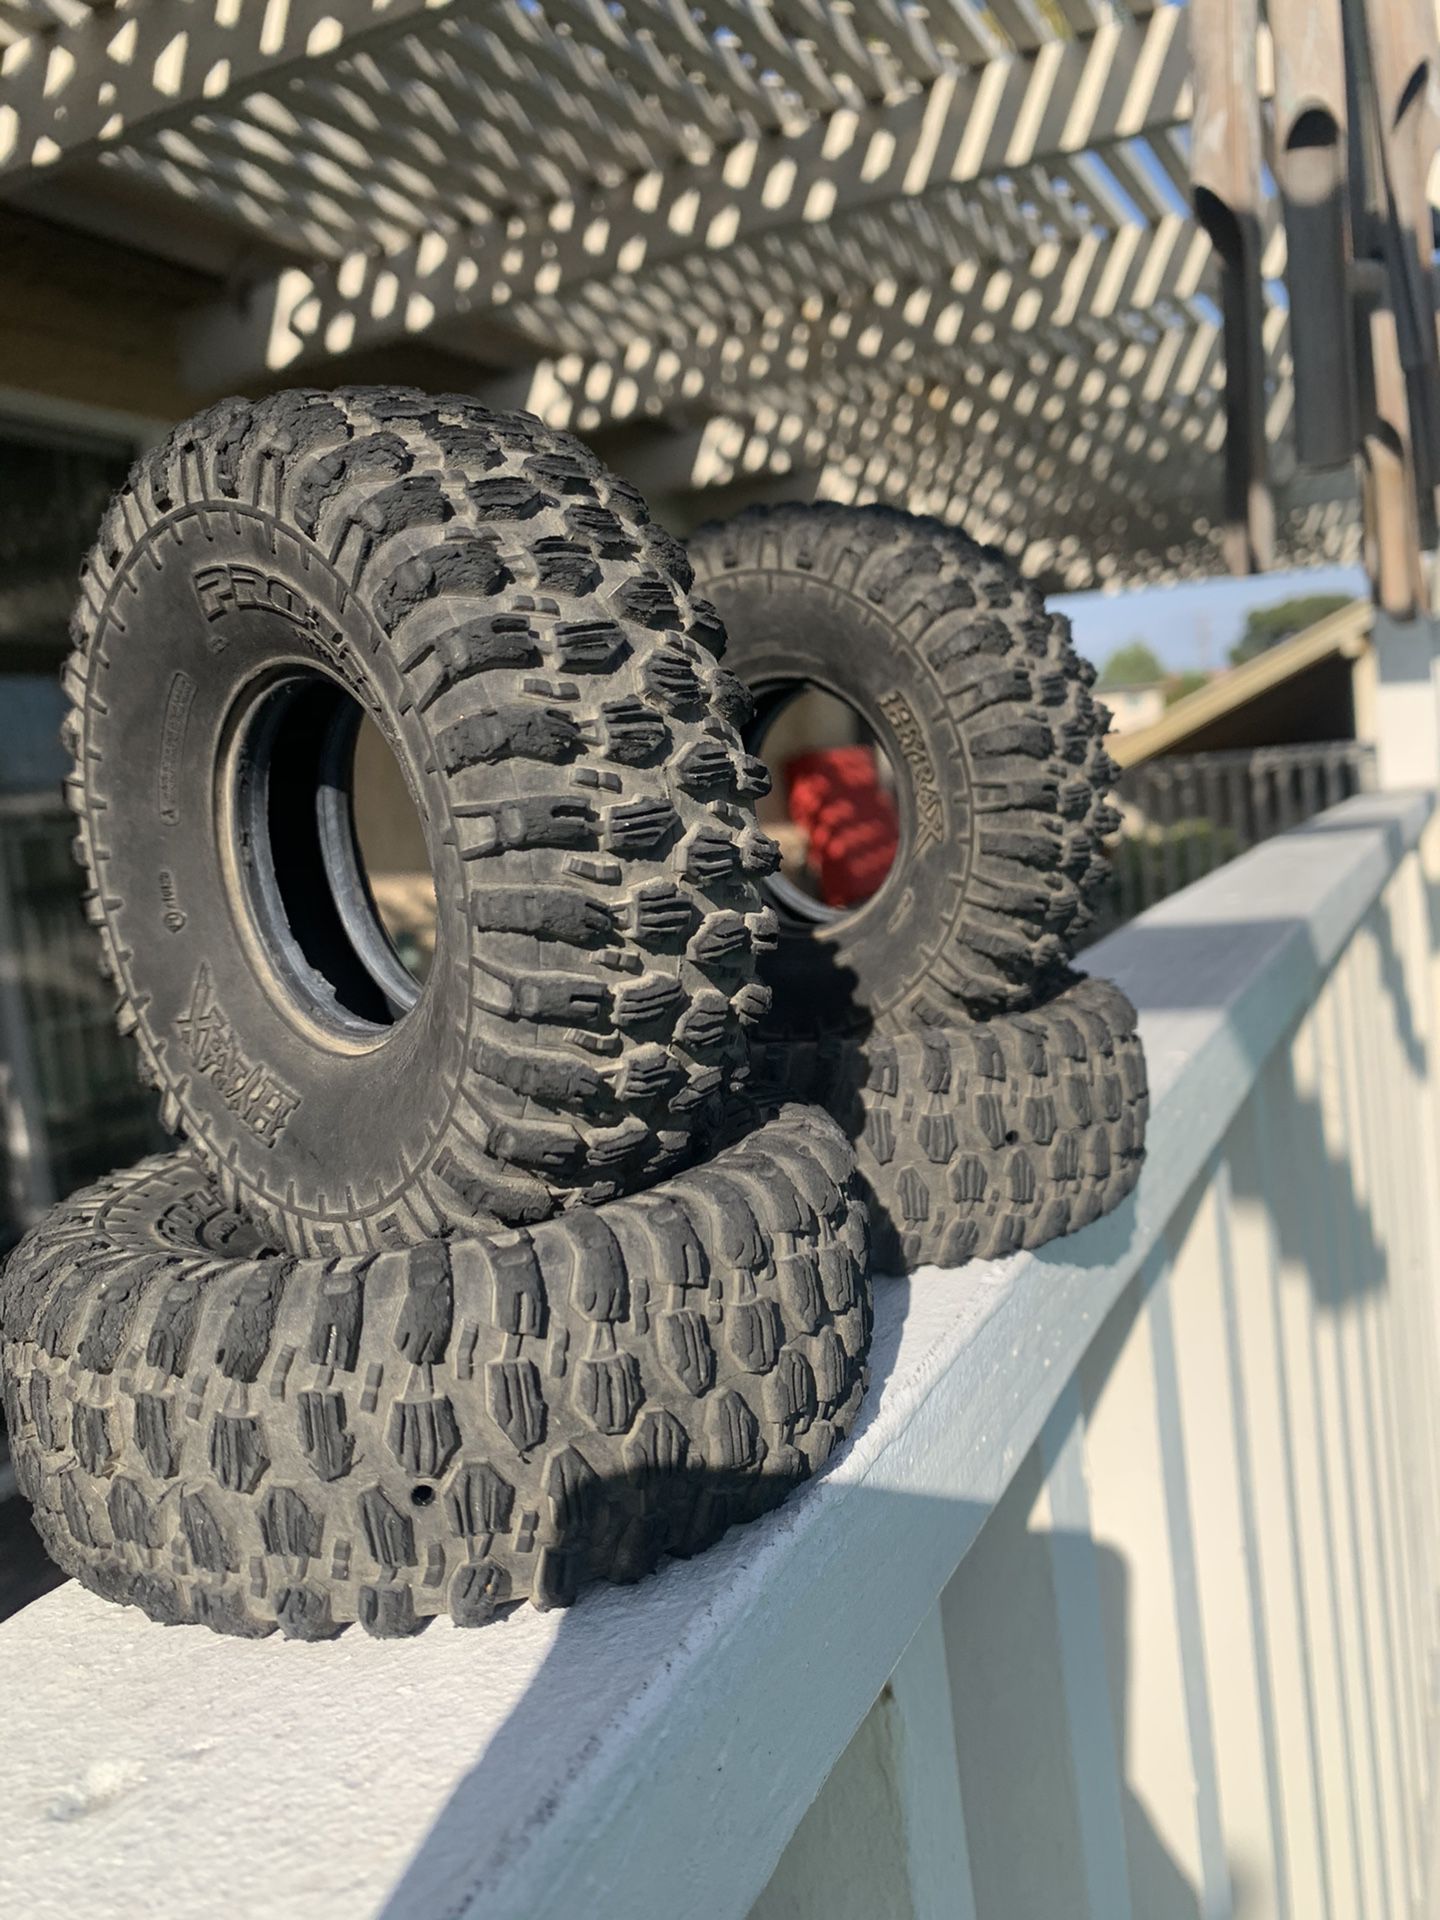 Proline hyrax 1.9 rock crawler tires